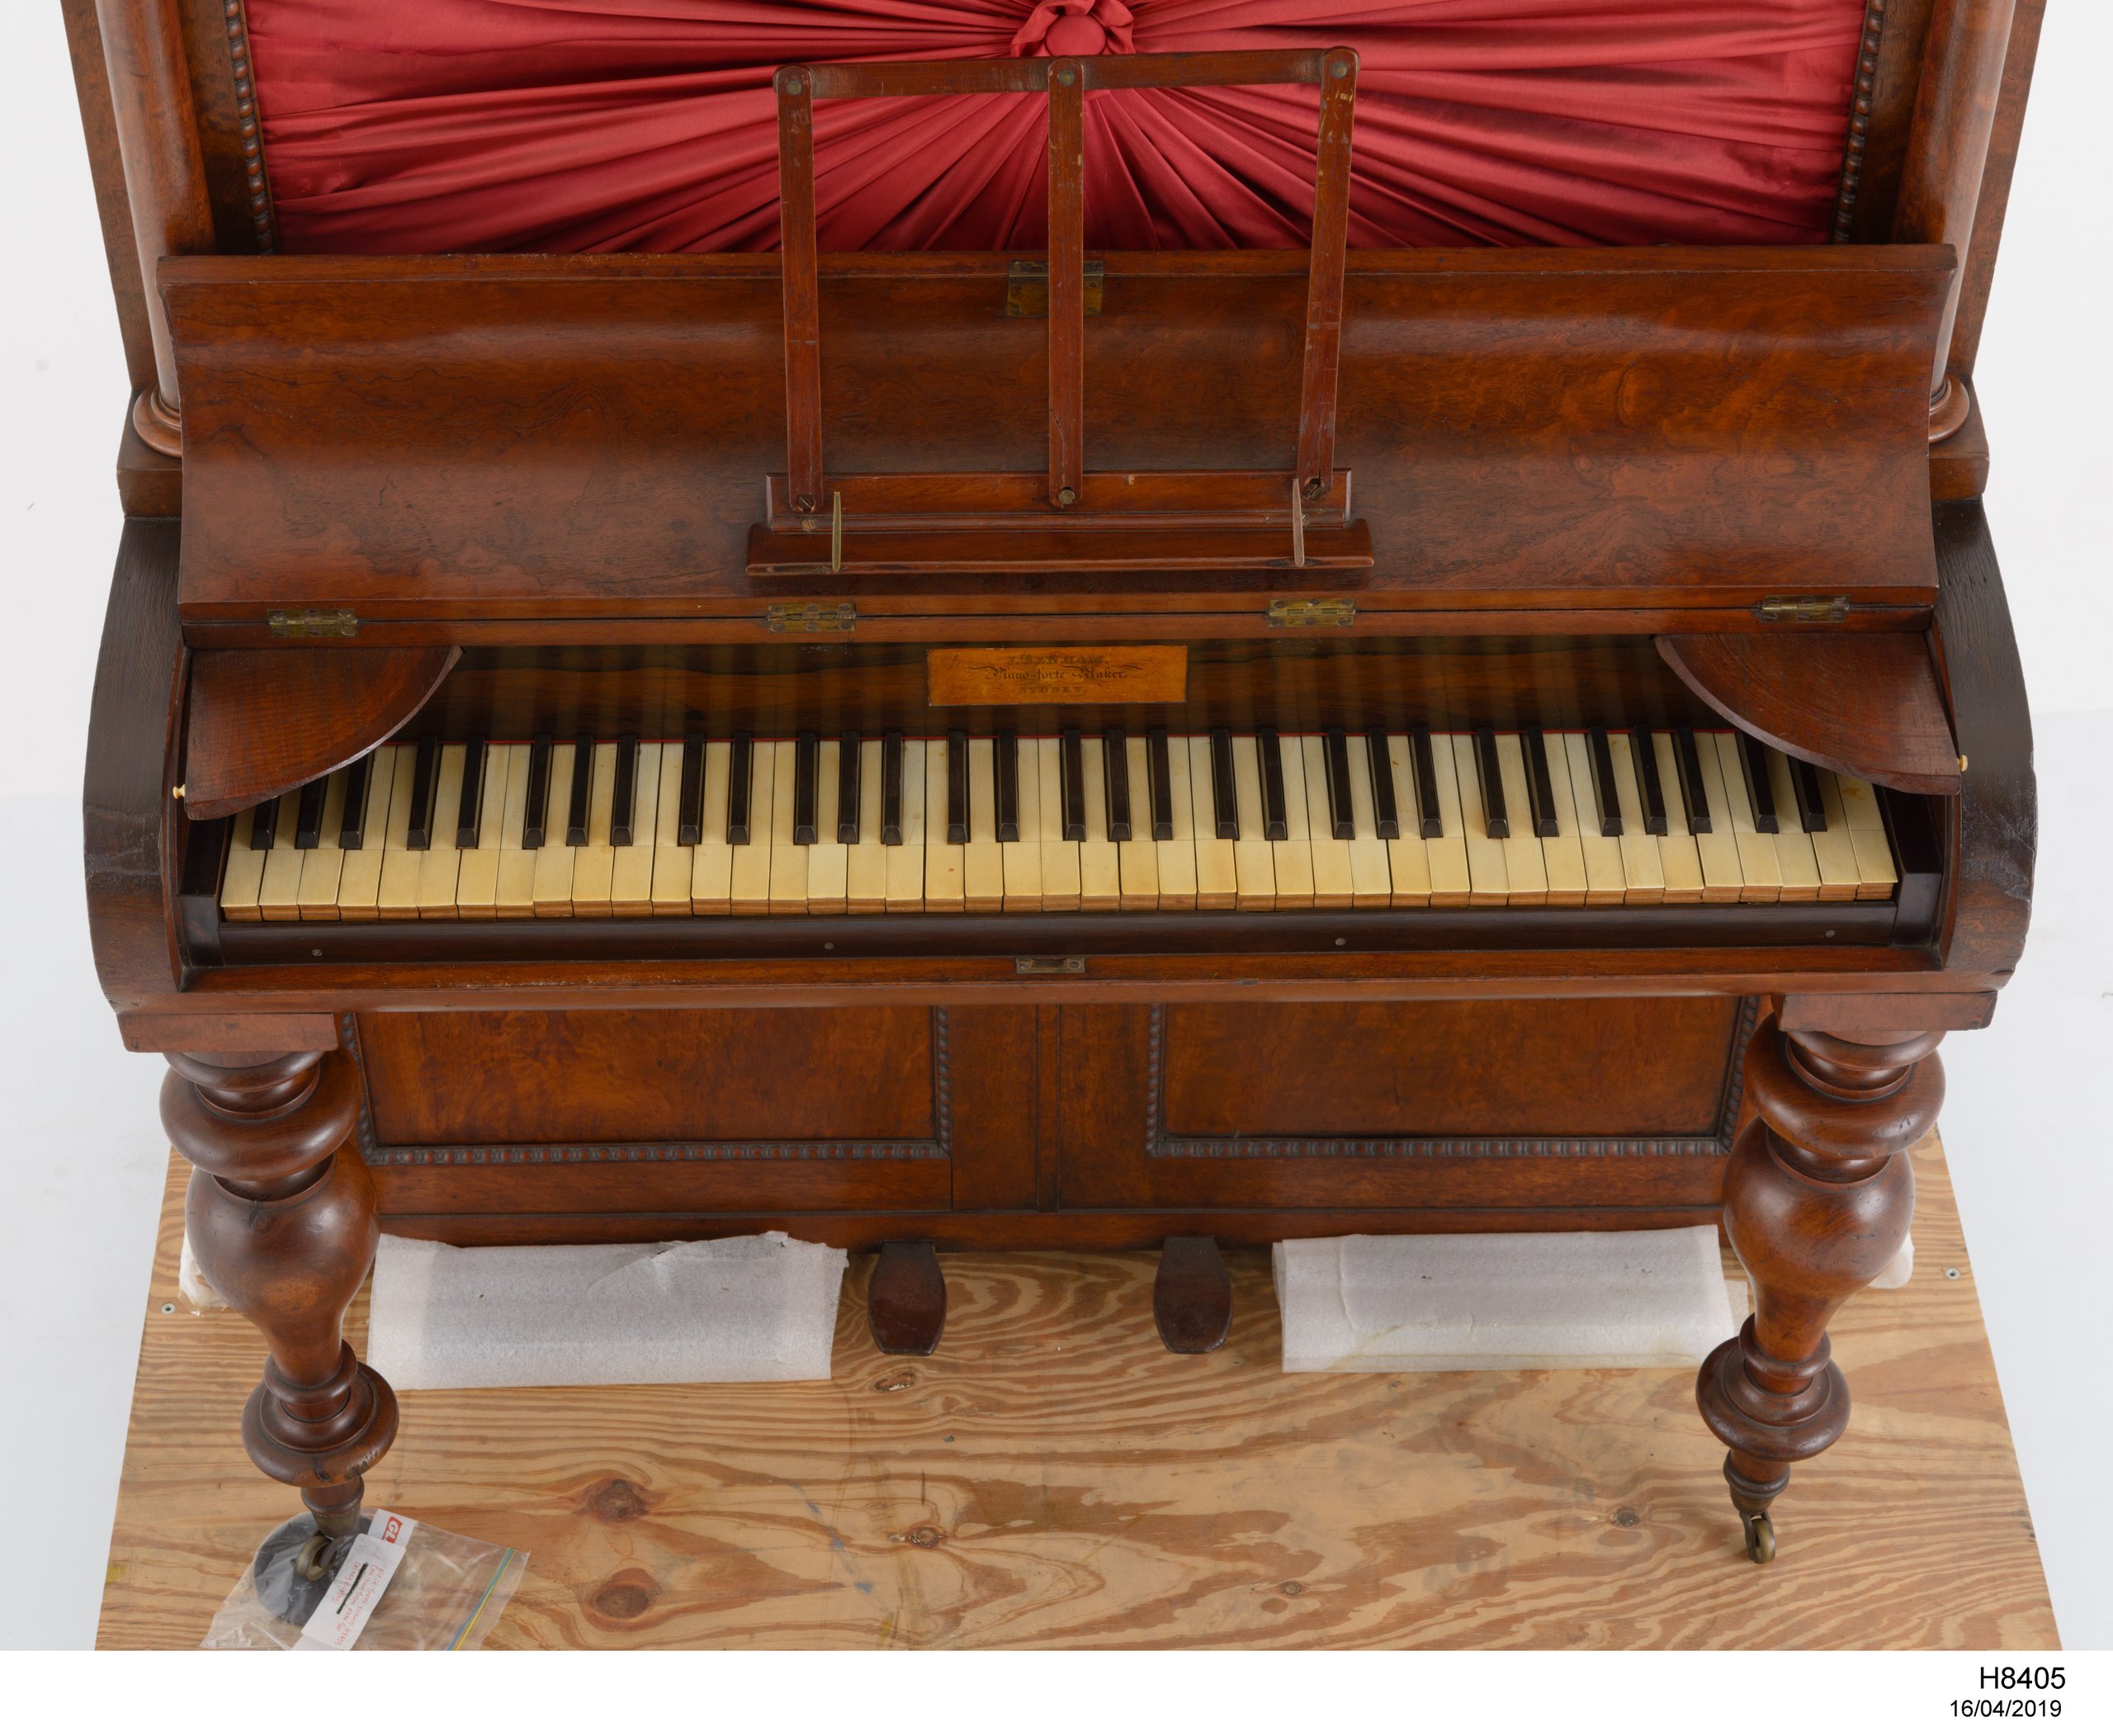 Upright pianoforte by John Benham